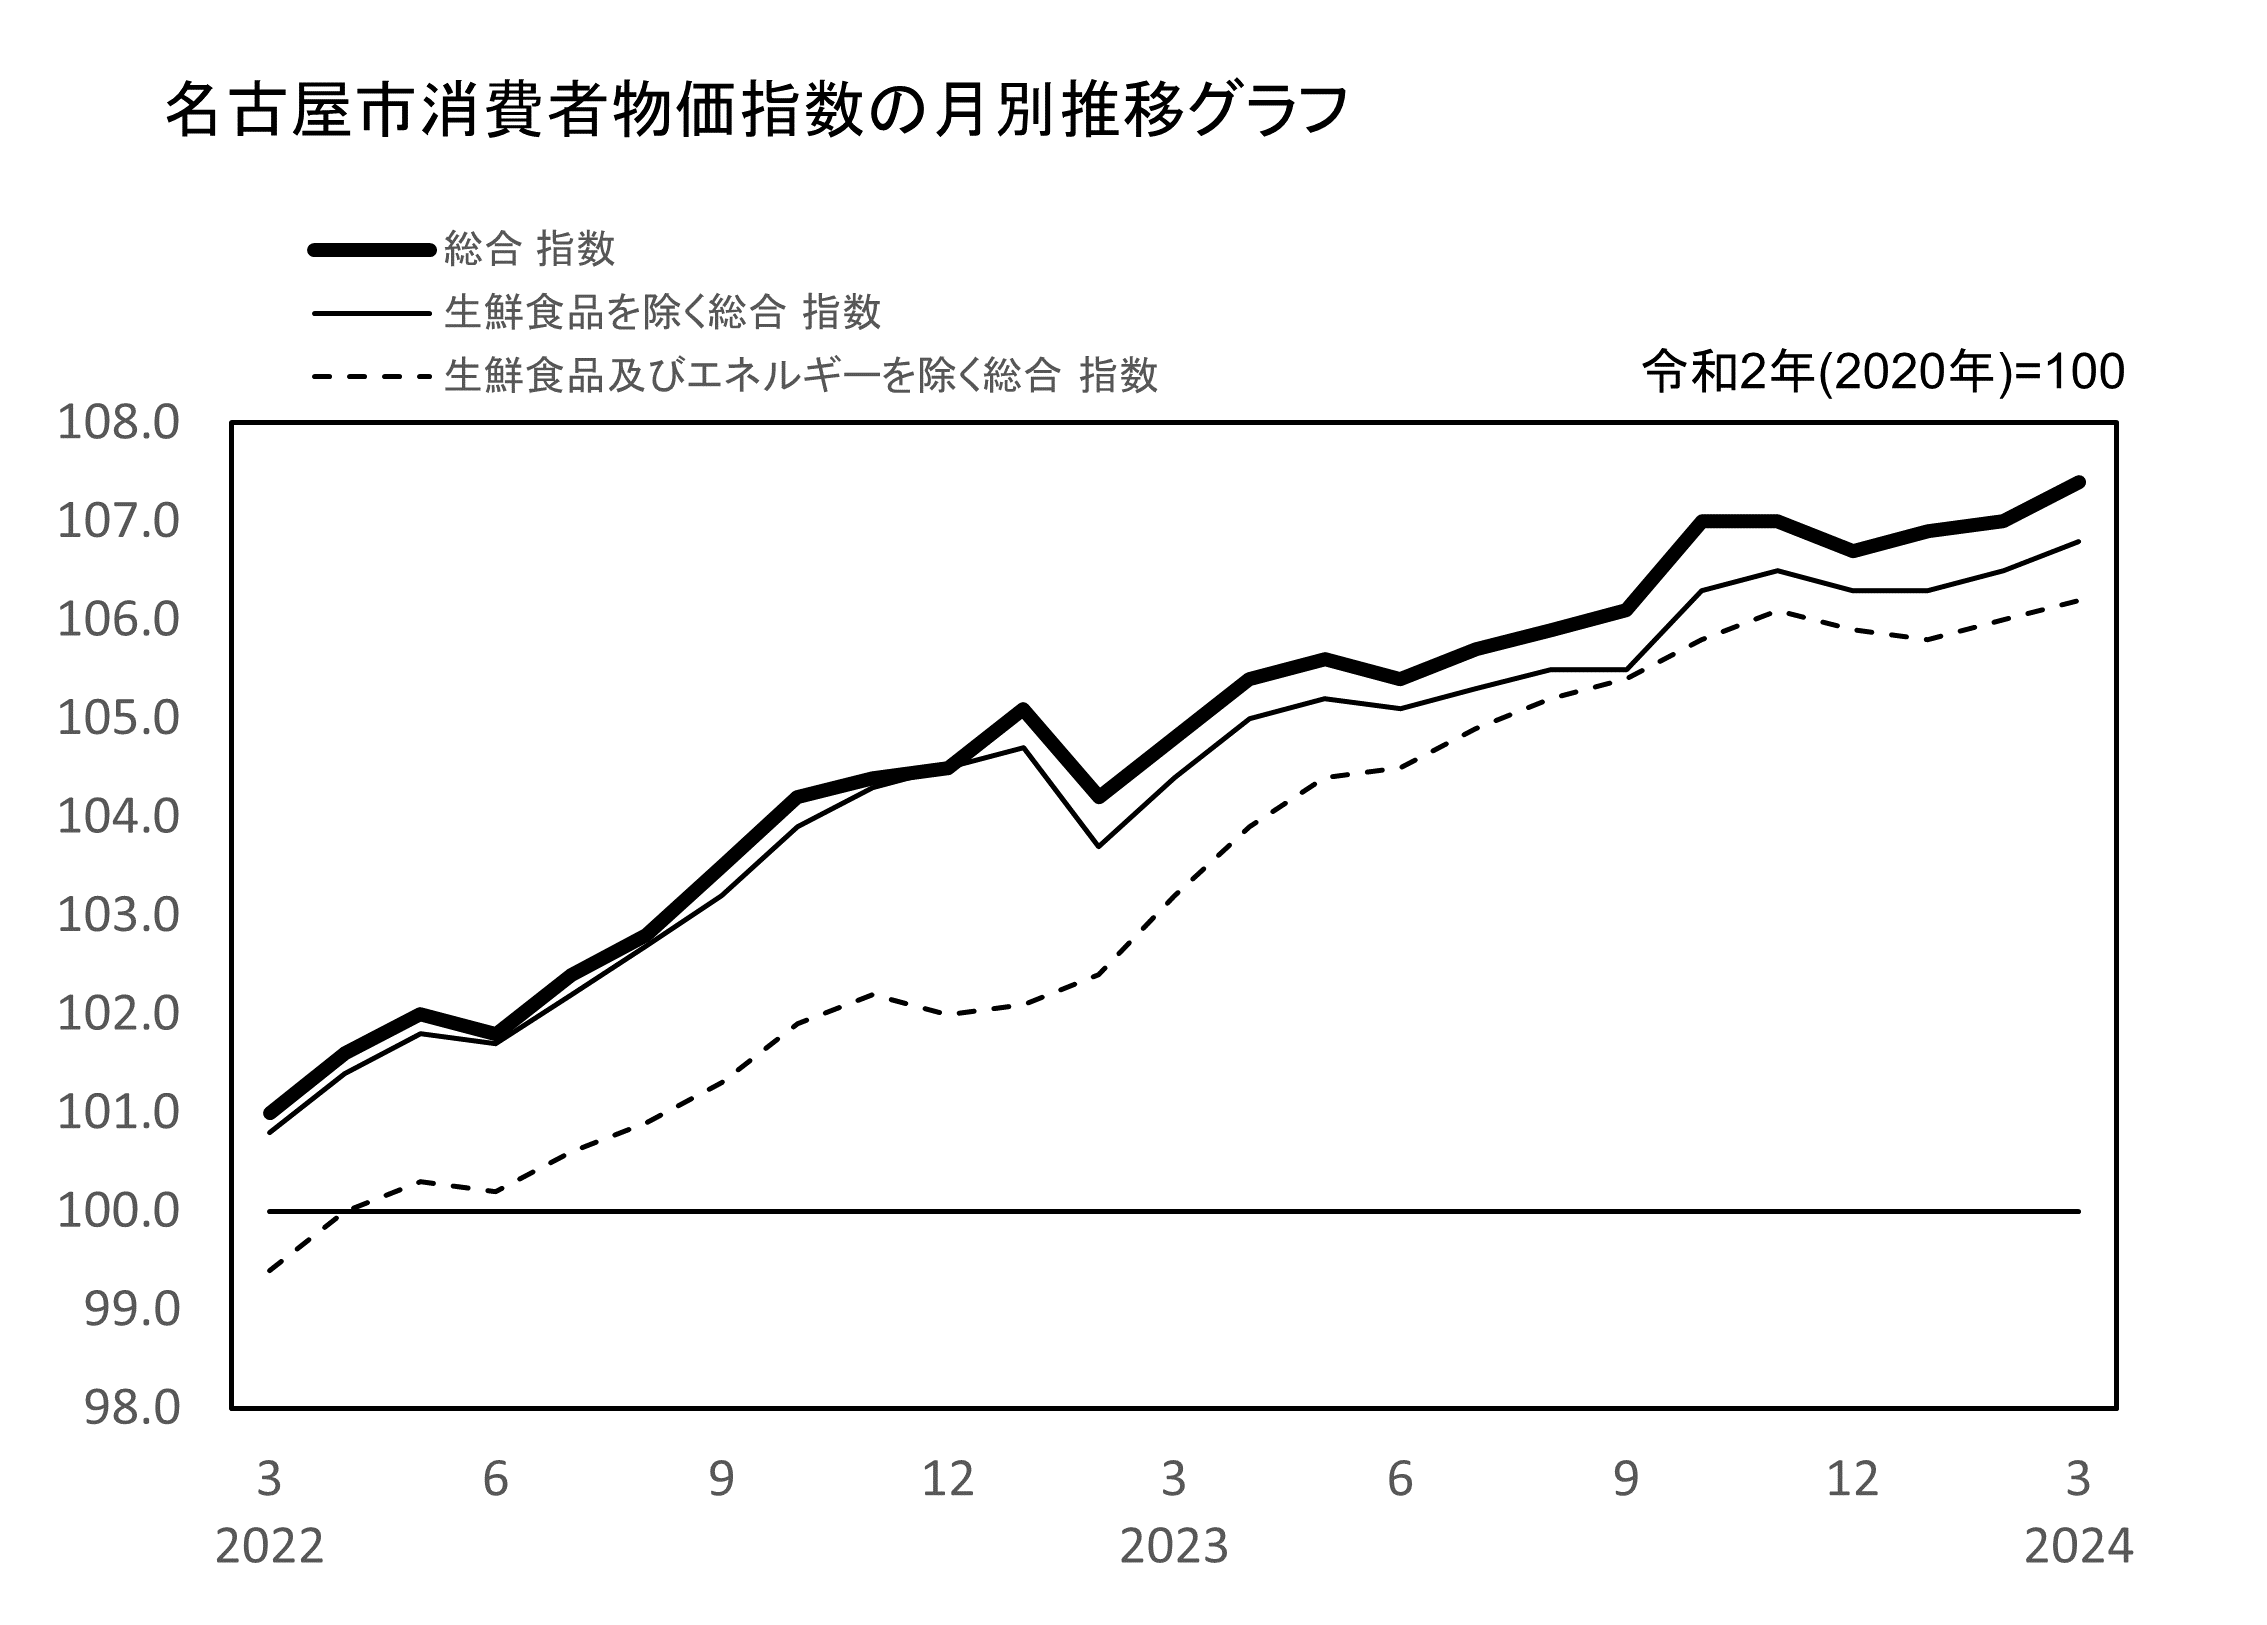 名古屋市消費者物価指数の月別推移グラフ